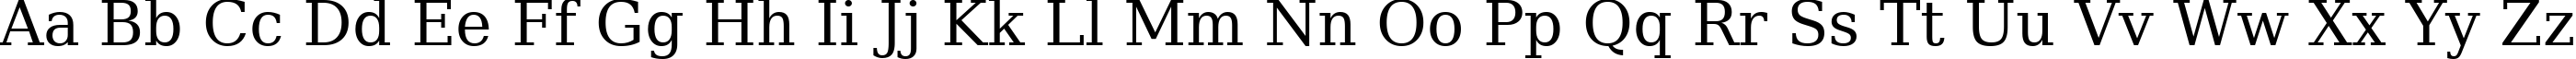 Пример написания английского алфавита шрифтом ae_Japan